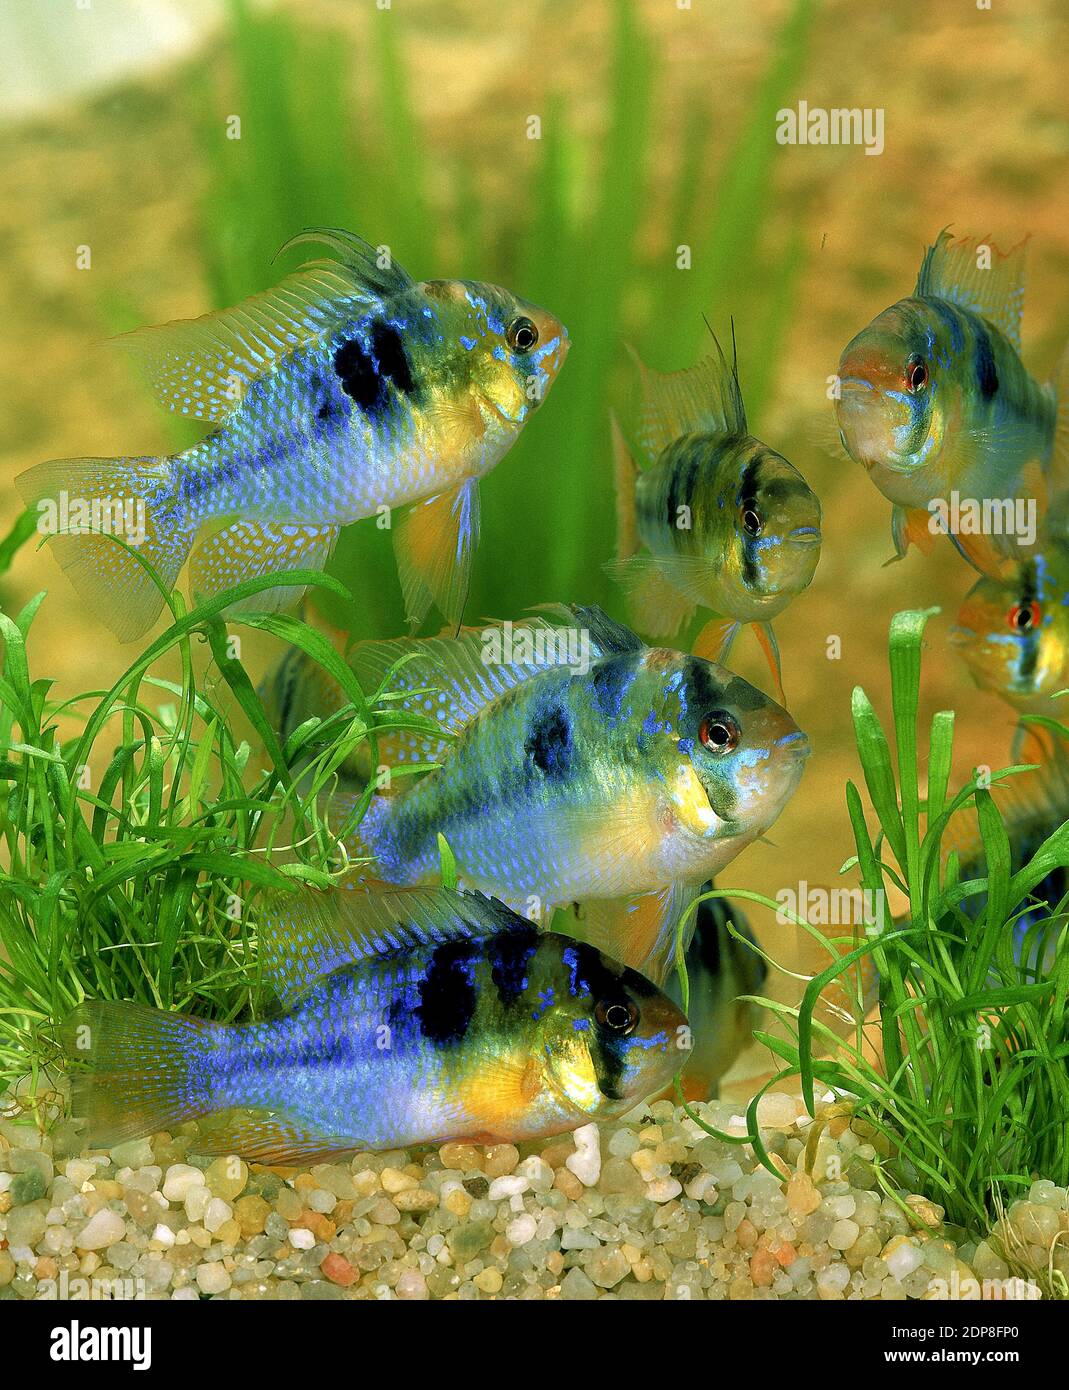 Blue German Ram, mikrogeophagus ramirezi Stock Photo